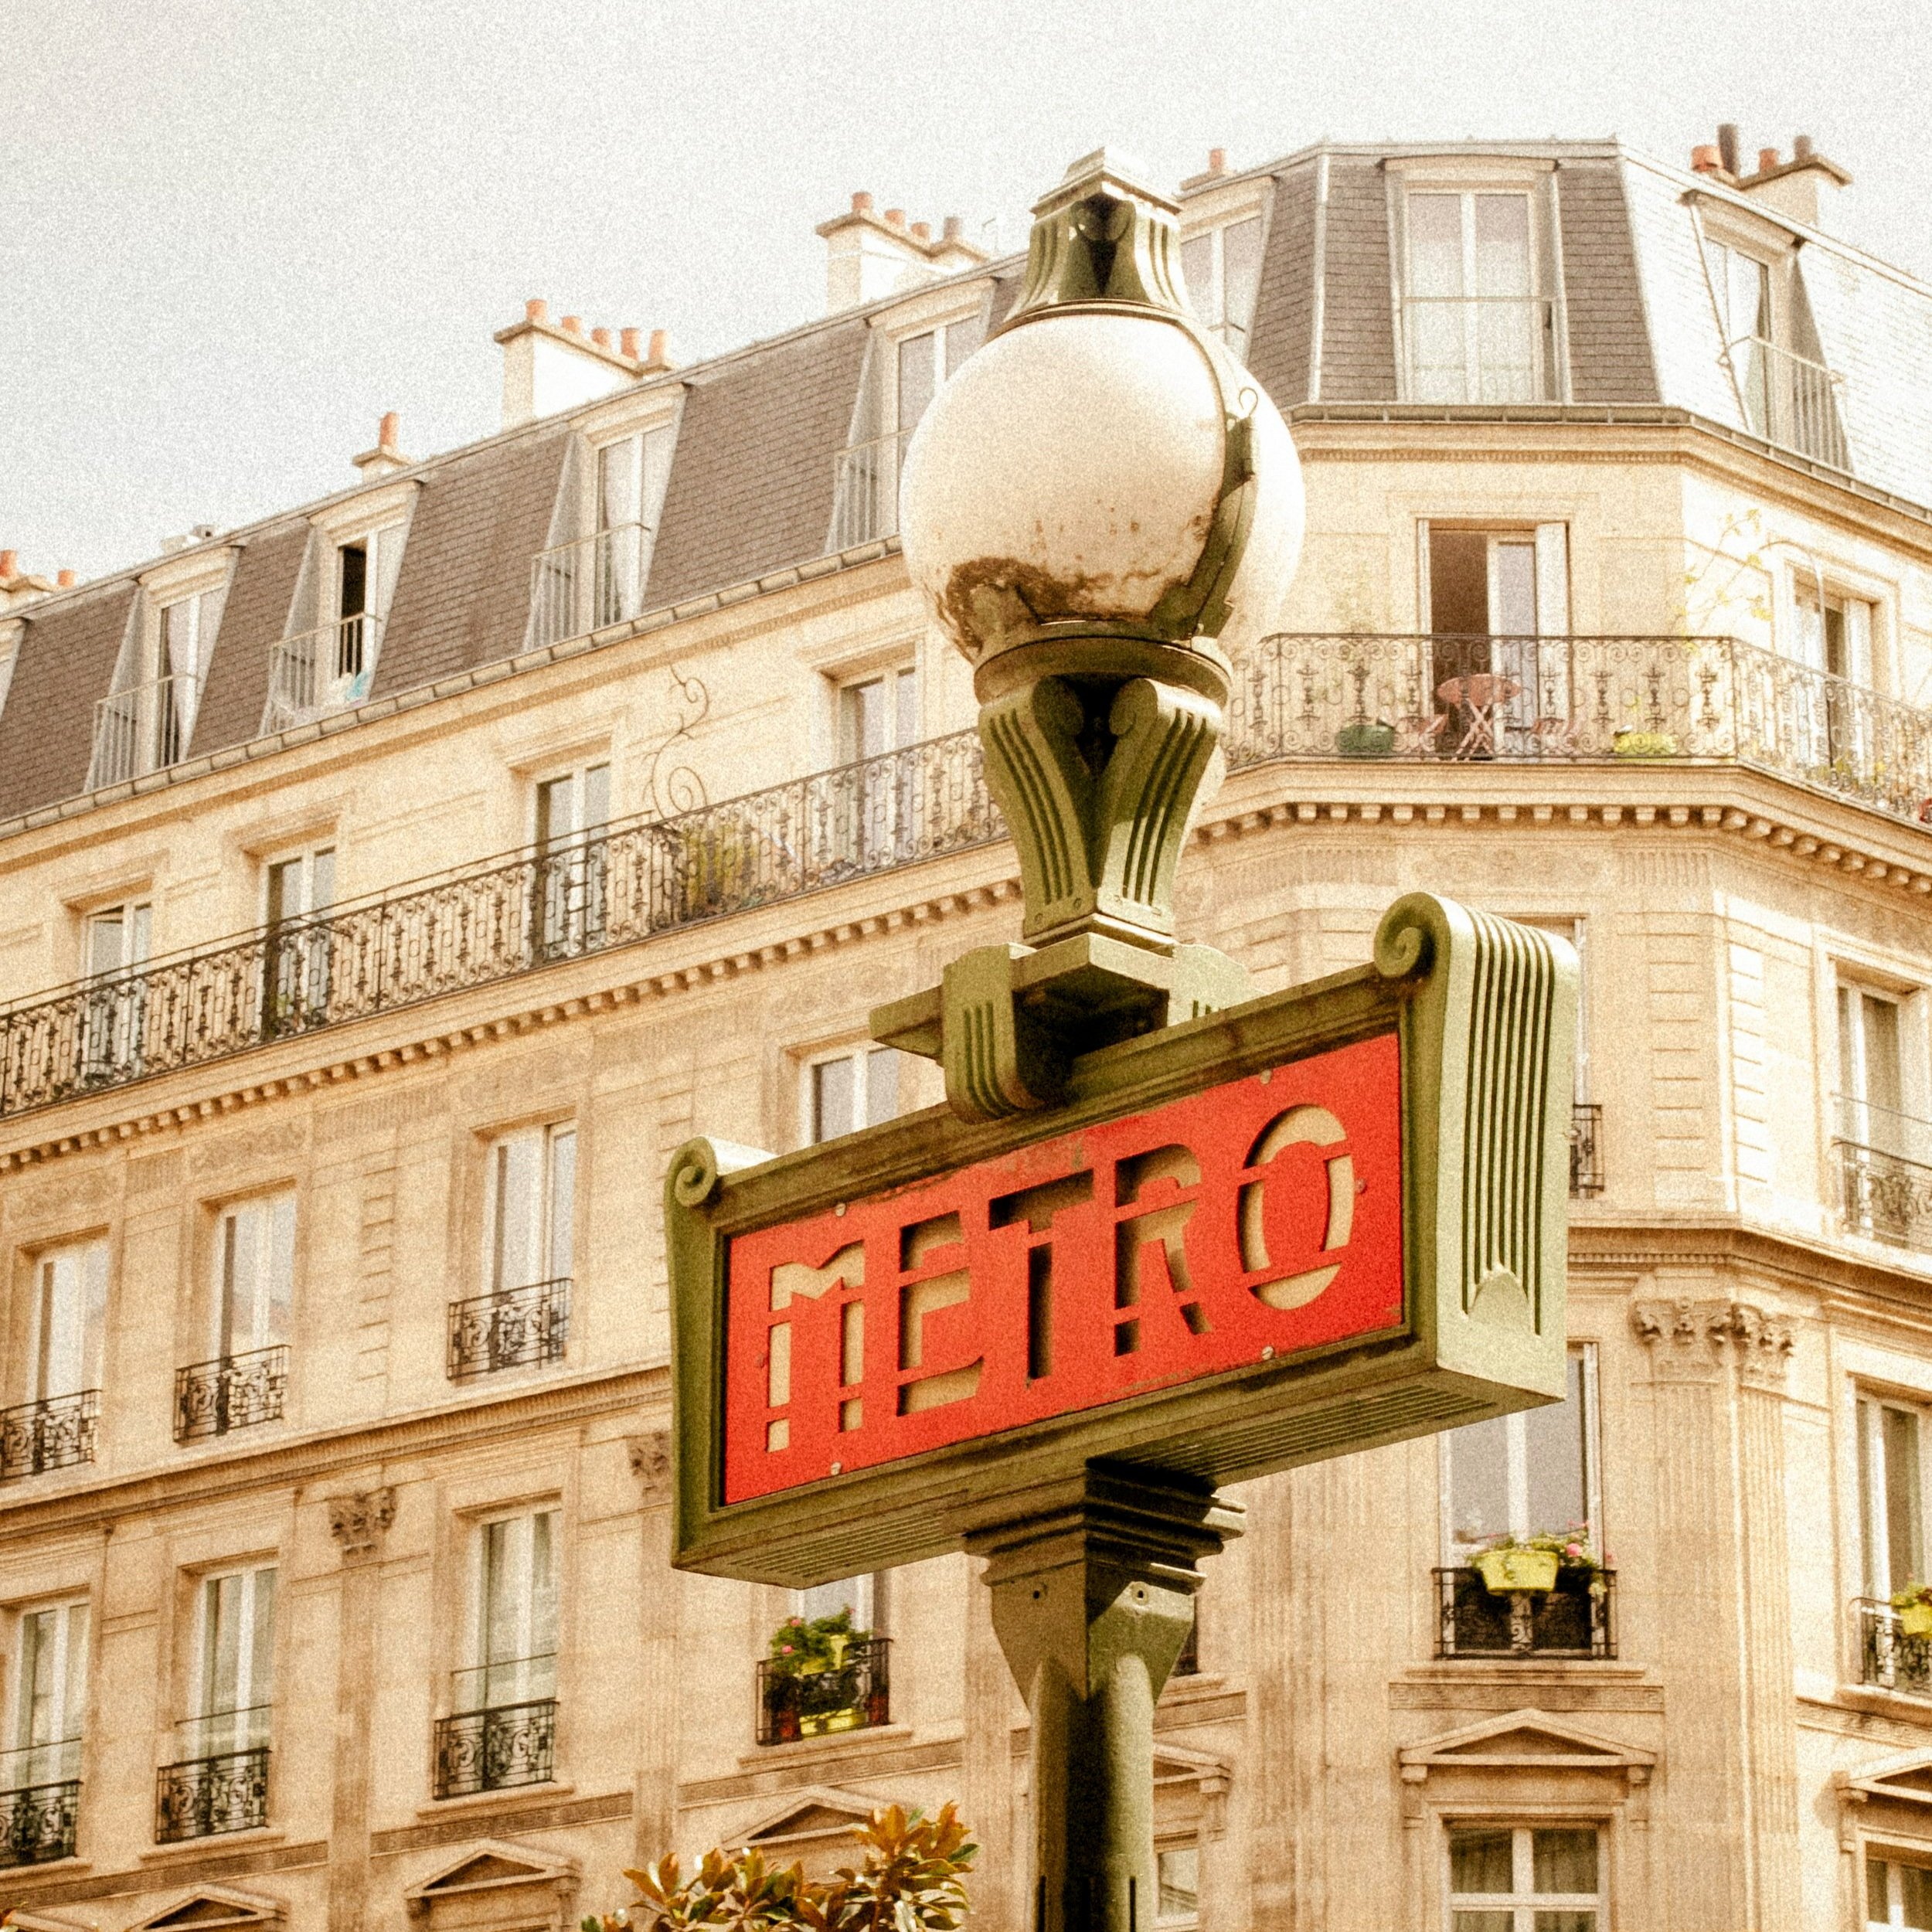 paris-metro-sign-travel-guide-paris-france